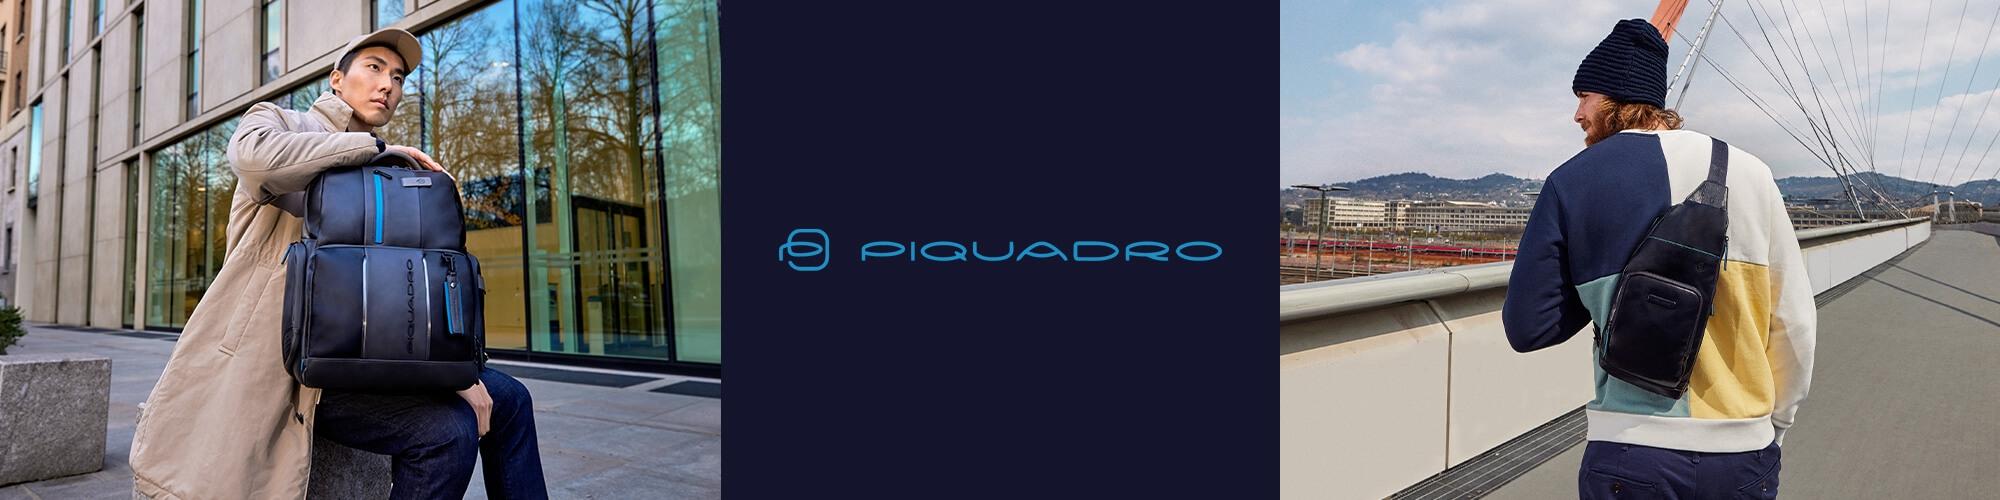 Piquadro